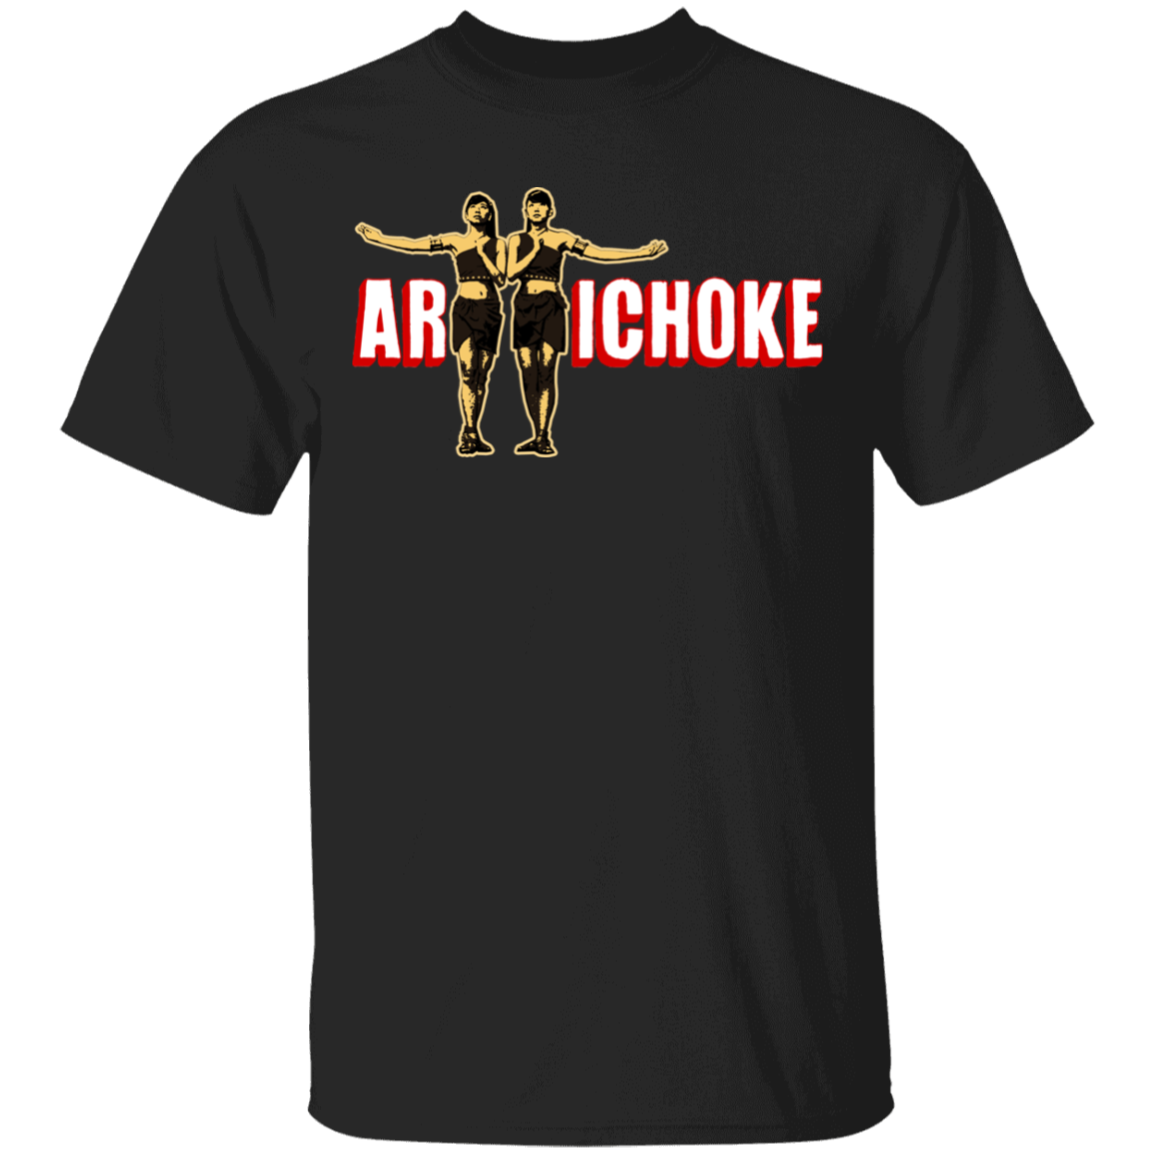 ArtichokeUSA Character and Font  Design #30. Mothra Fan Art. Universal Basic 100% Cotton T-Shirt